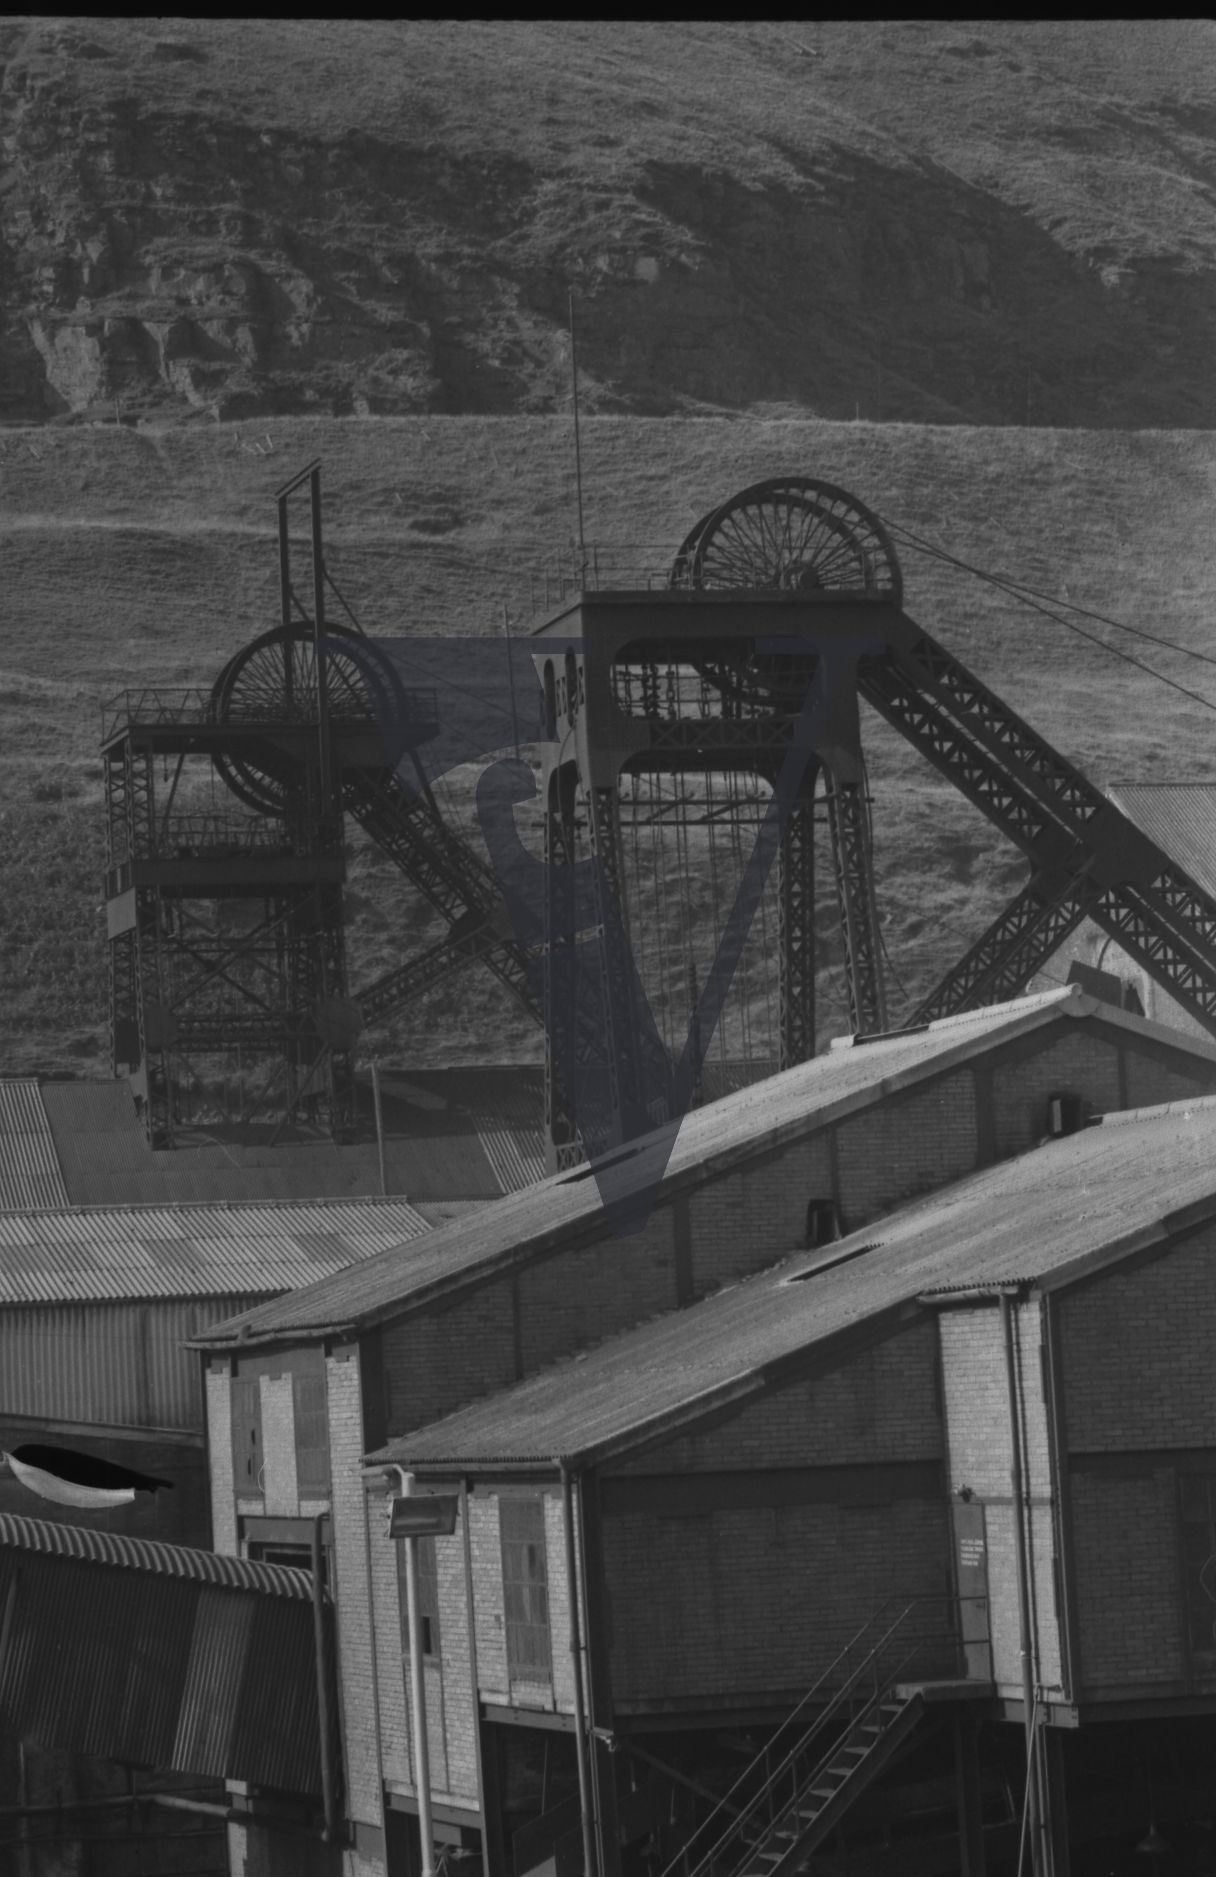 Tonypandy, Wales, Mining Community, mine shafts.